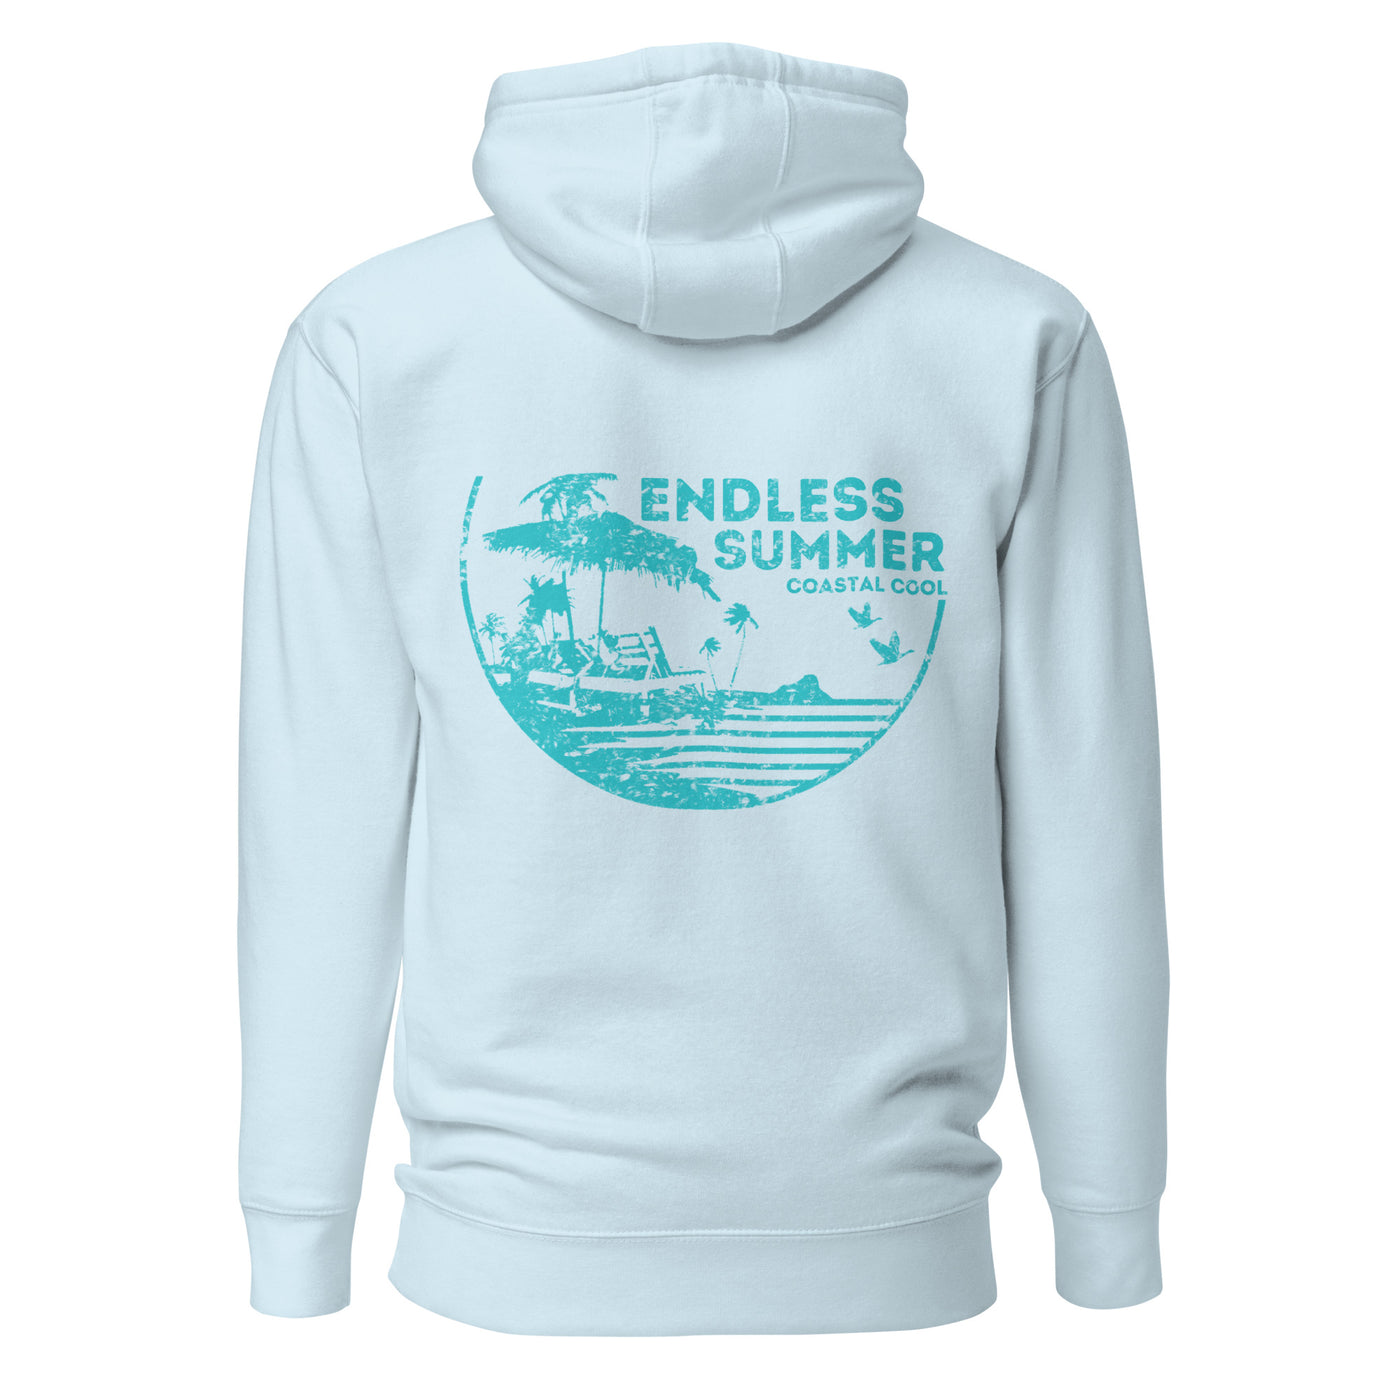 Endless Summer Hoodie - Coastal Cool - Swimwear and Beachwear - Recycled fabrics